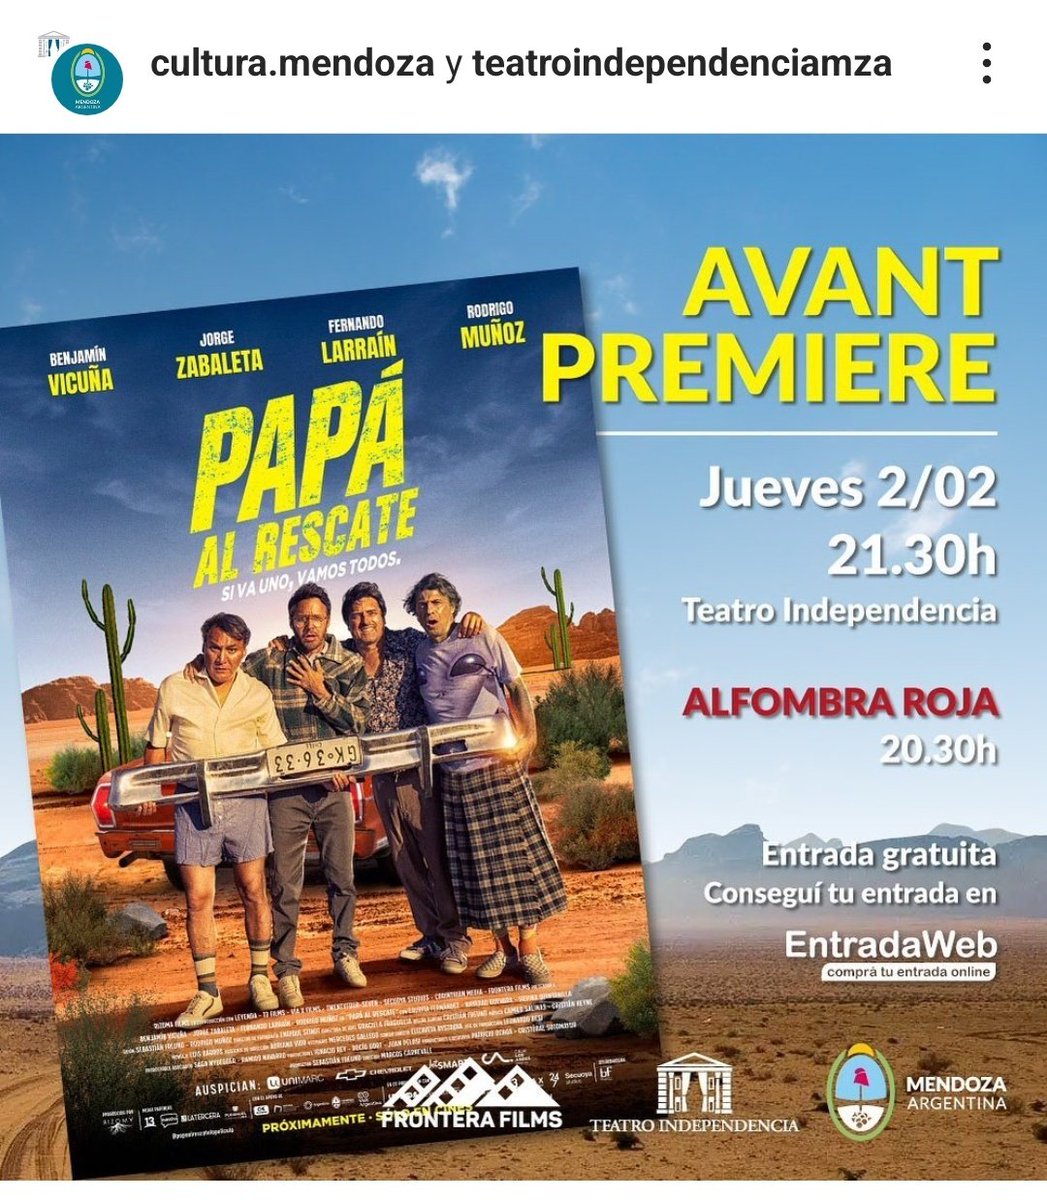 Avant Premiere 🎬 jueves 2/02 
#PapáAlRescate